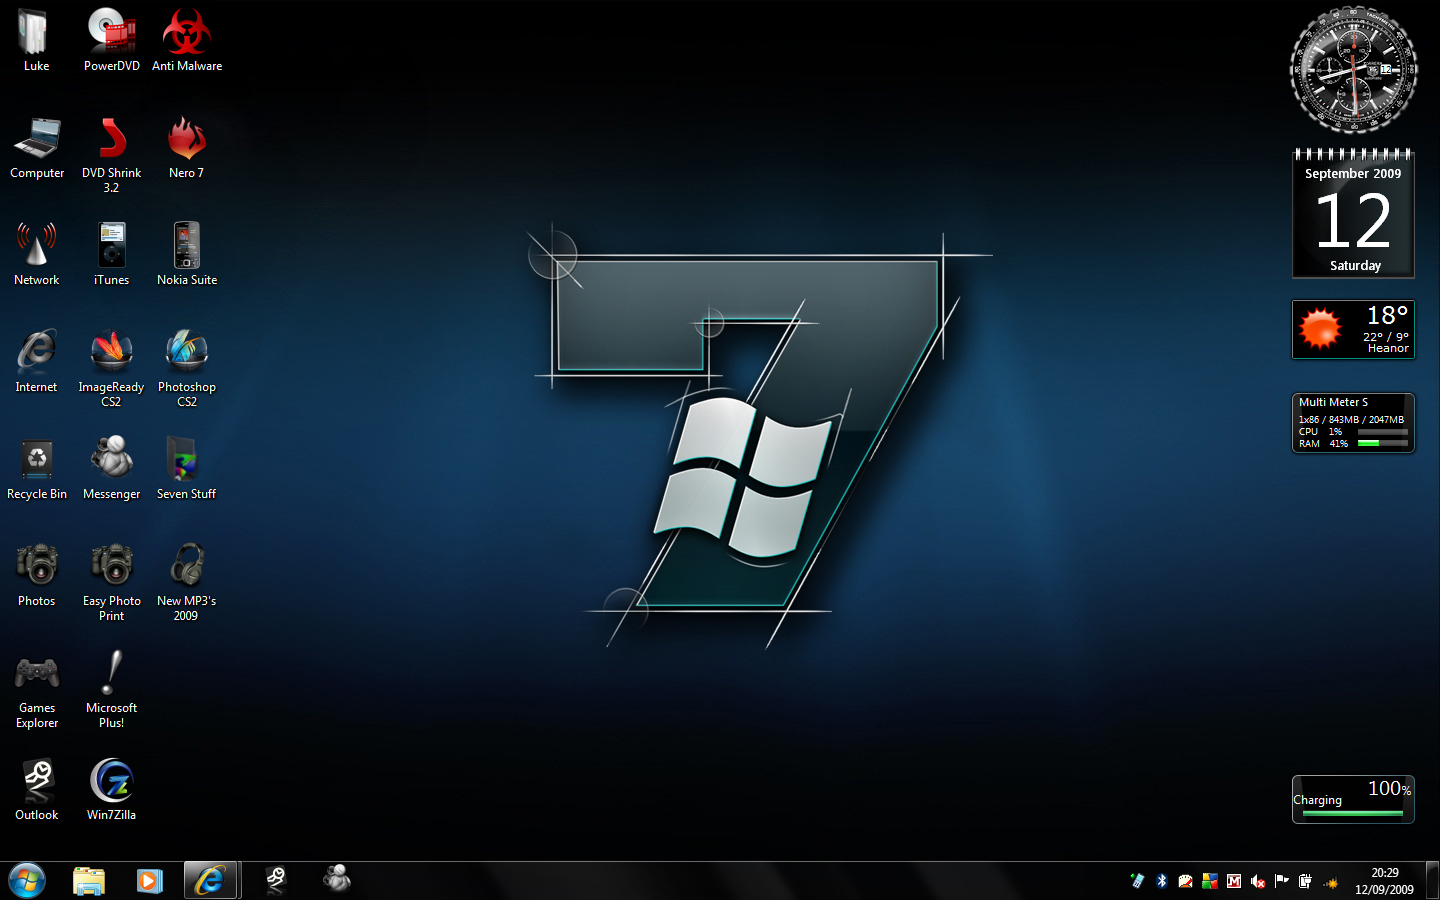 Windows 7 Desktop by ddukey on DeviantArt